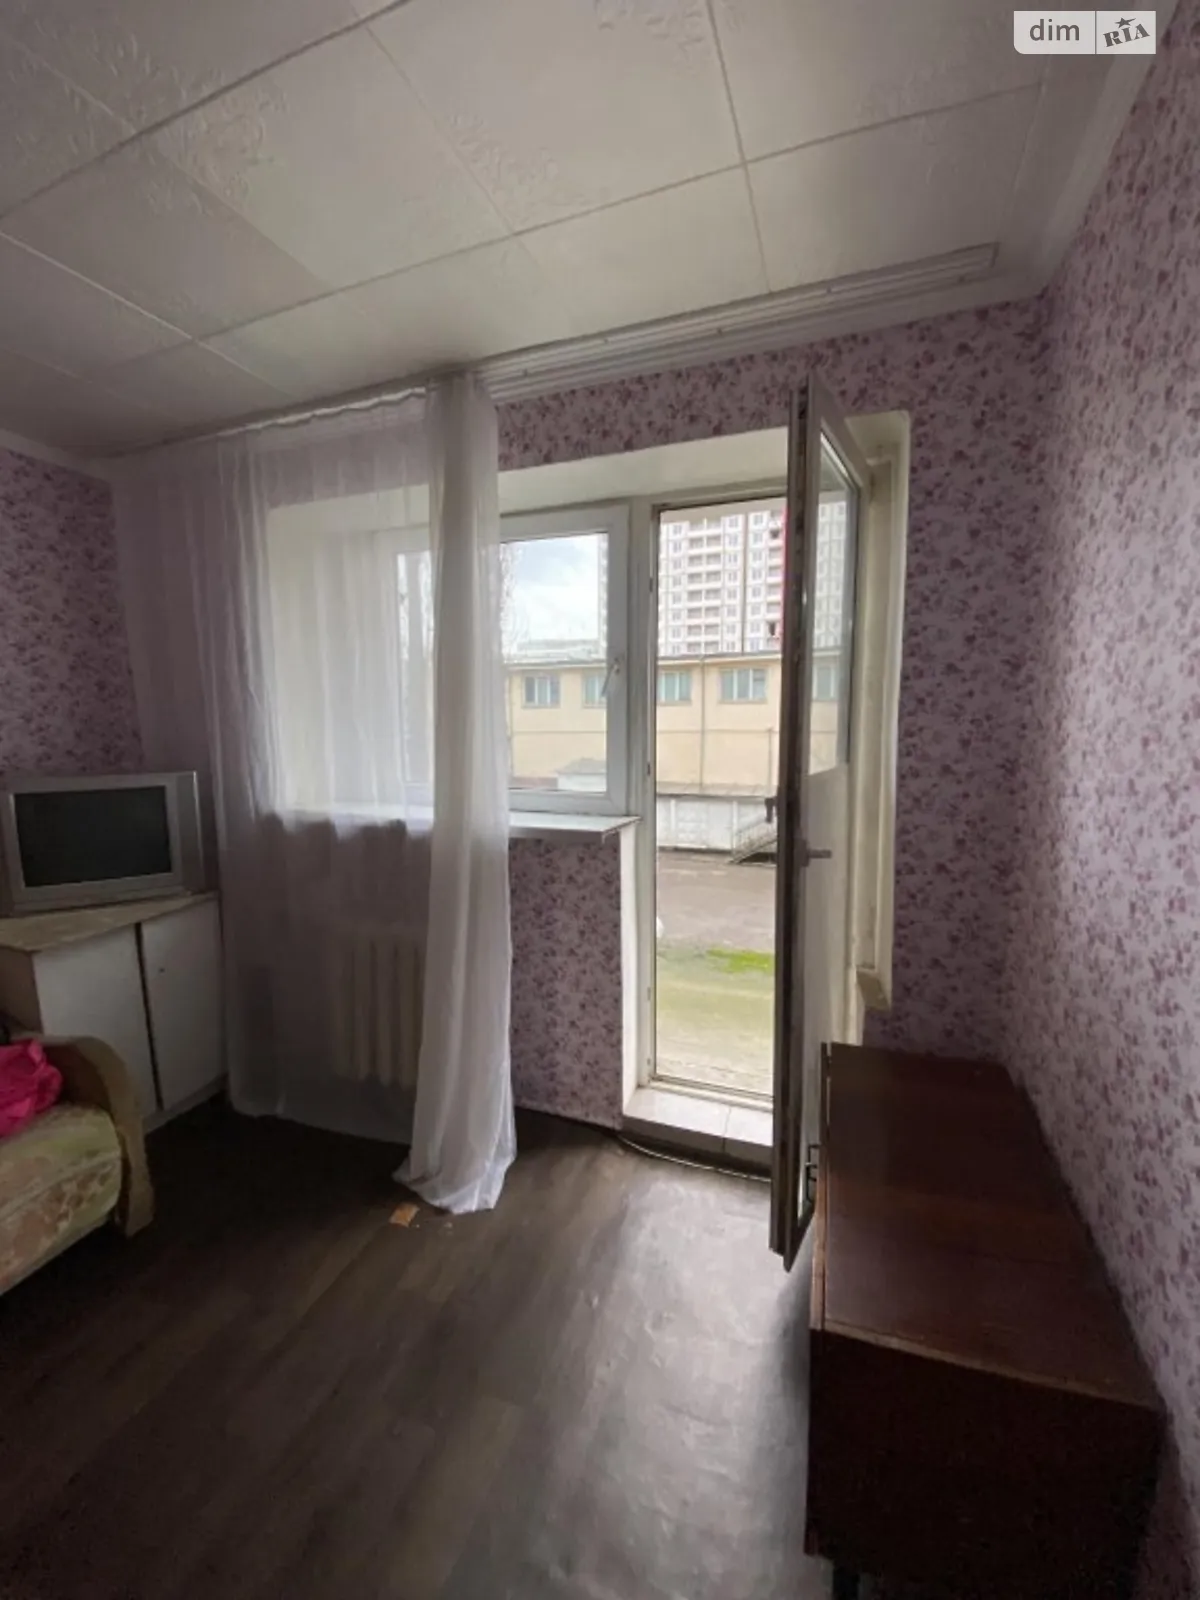 Продается комната 36 кв. м в Одессе, цена: 15000 $ - фото 1